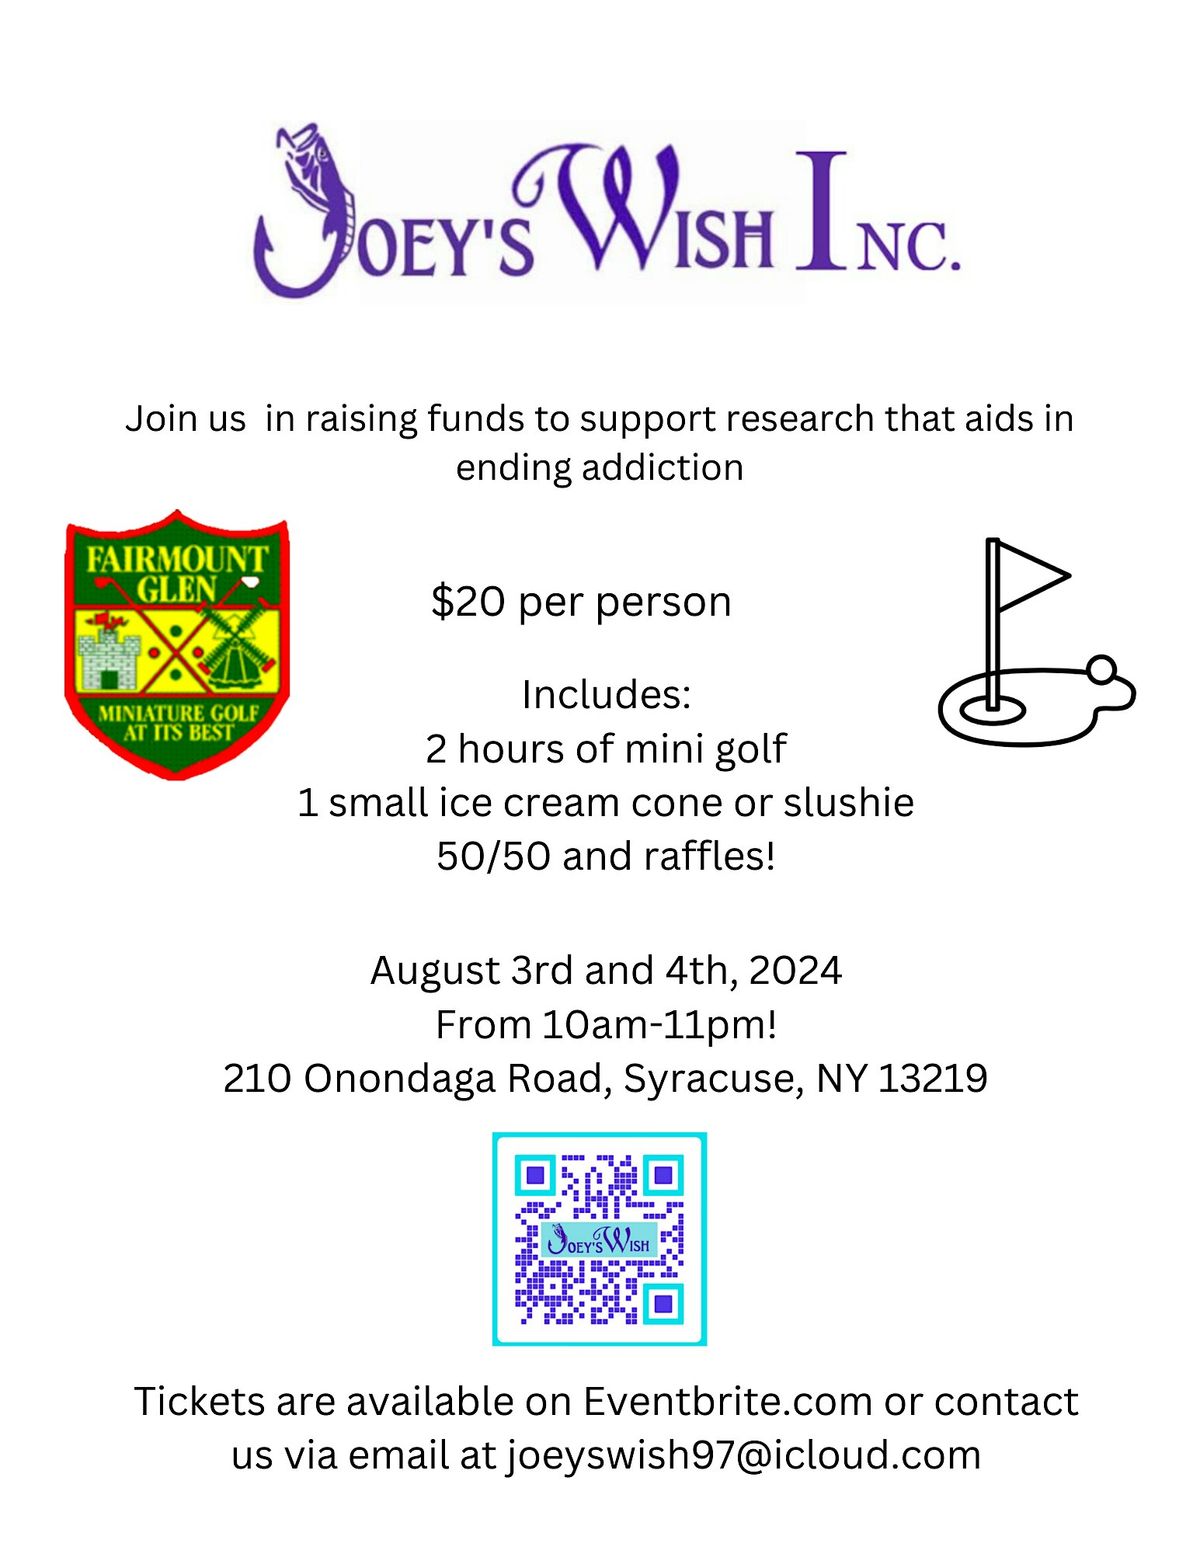 Joey\u2019s Wish Inc. 2nd annual putt-putt fundraiser.